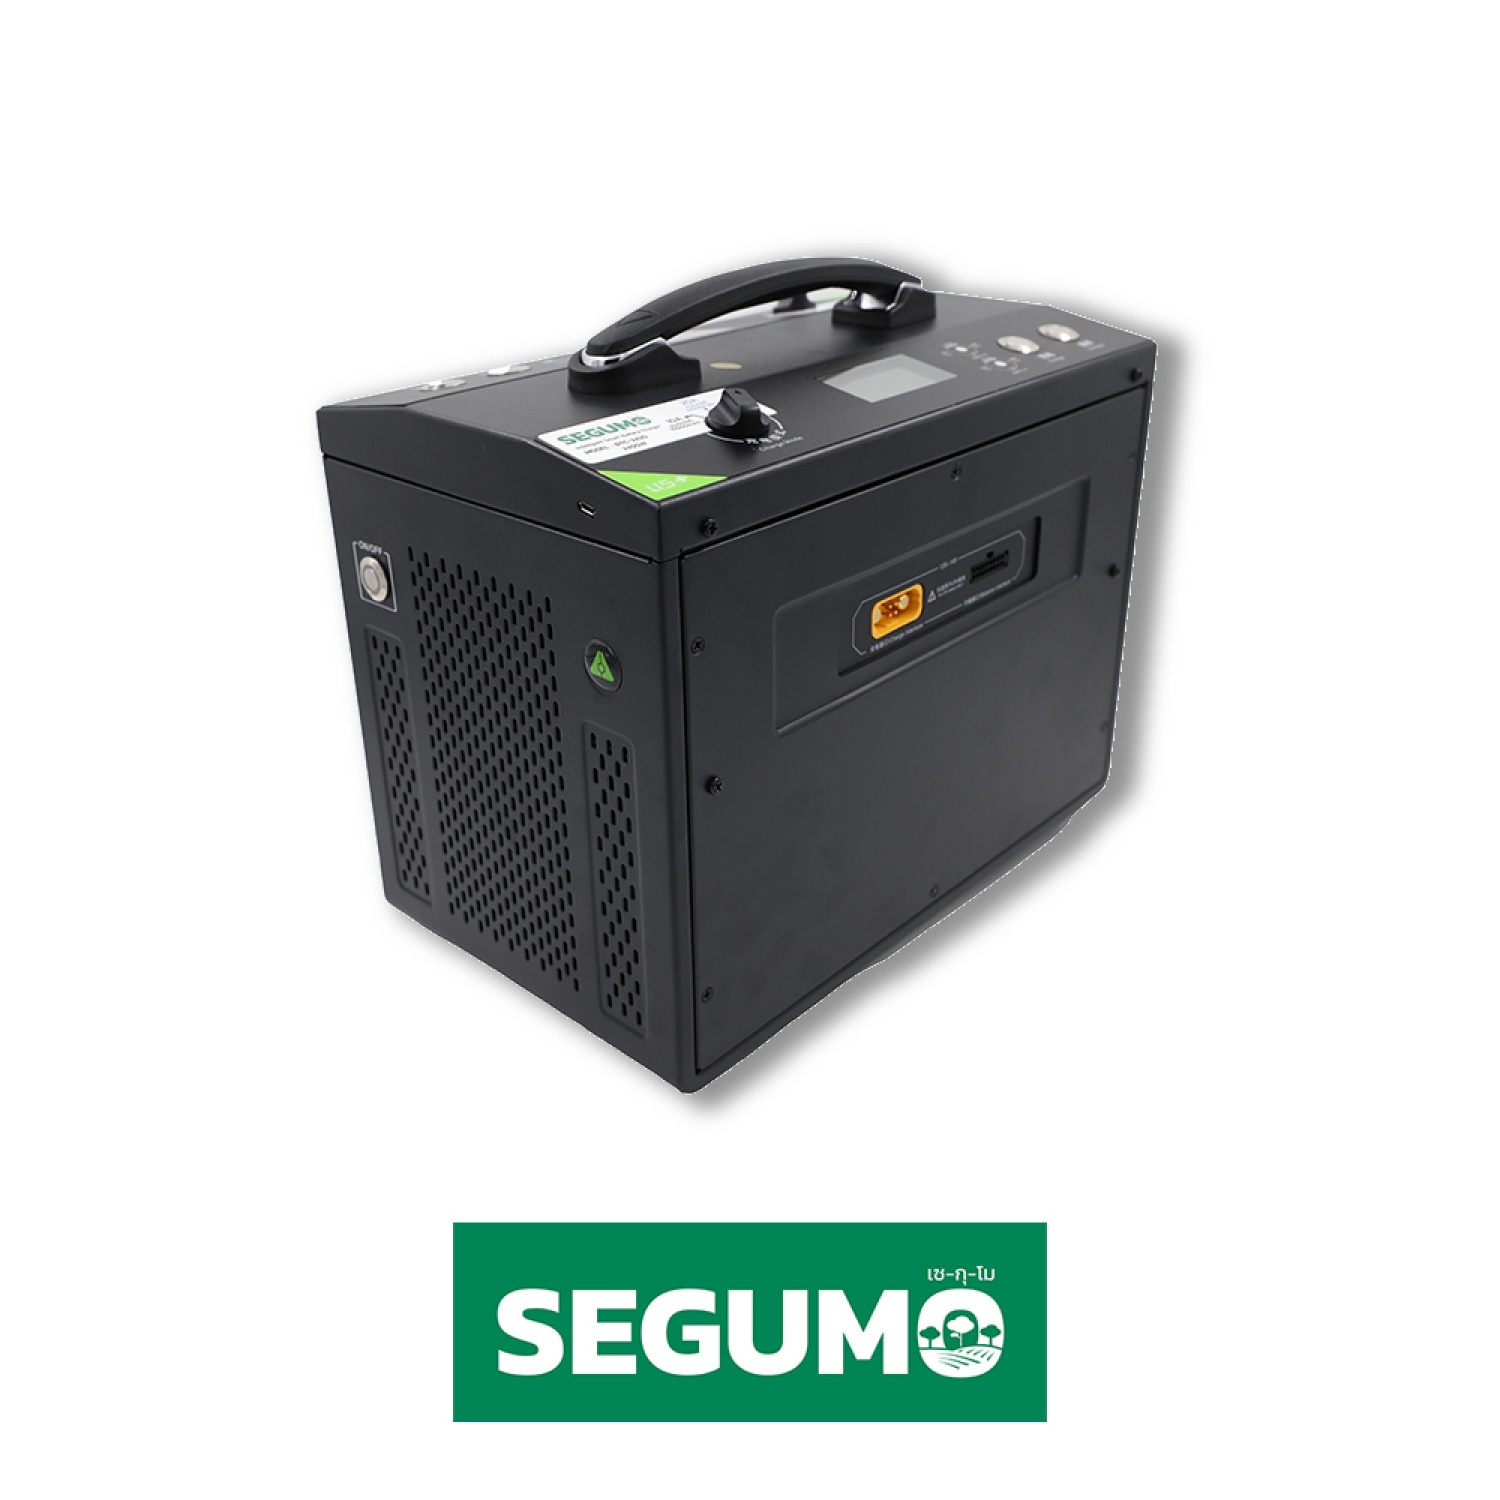 SEGUMO โดรนการเกษตร SG-10L Pro เครื่องชาร์จ 2400W. แบต 4ก้อน 